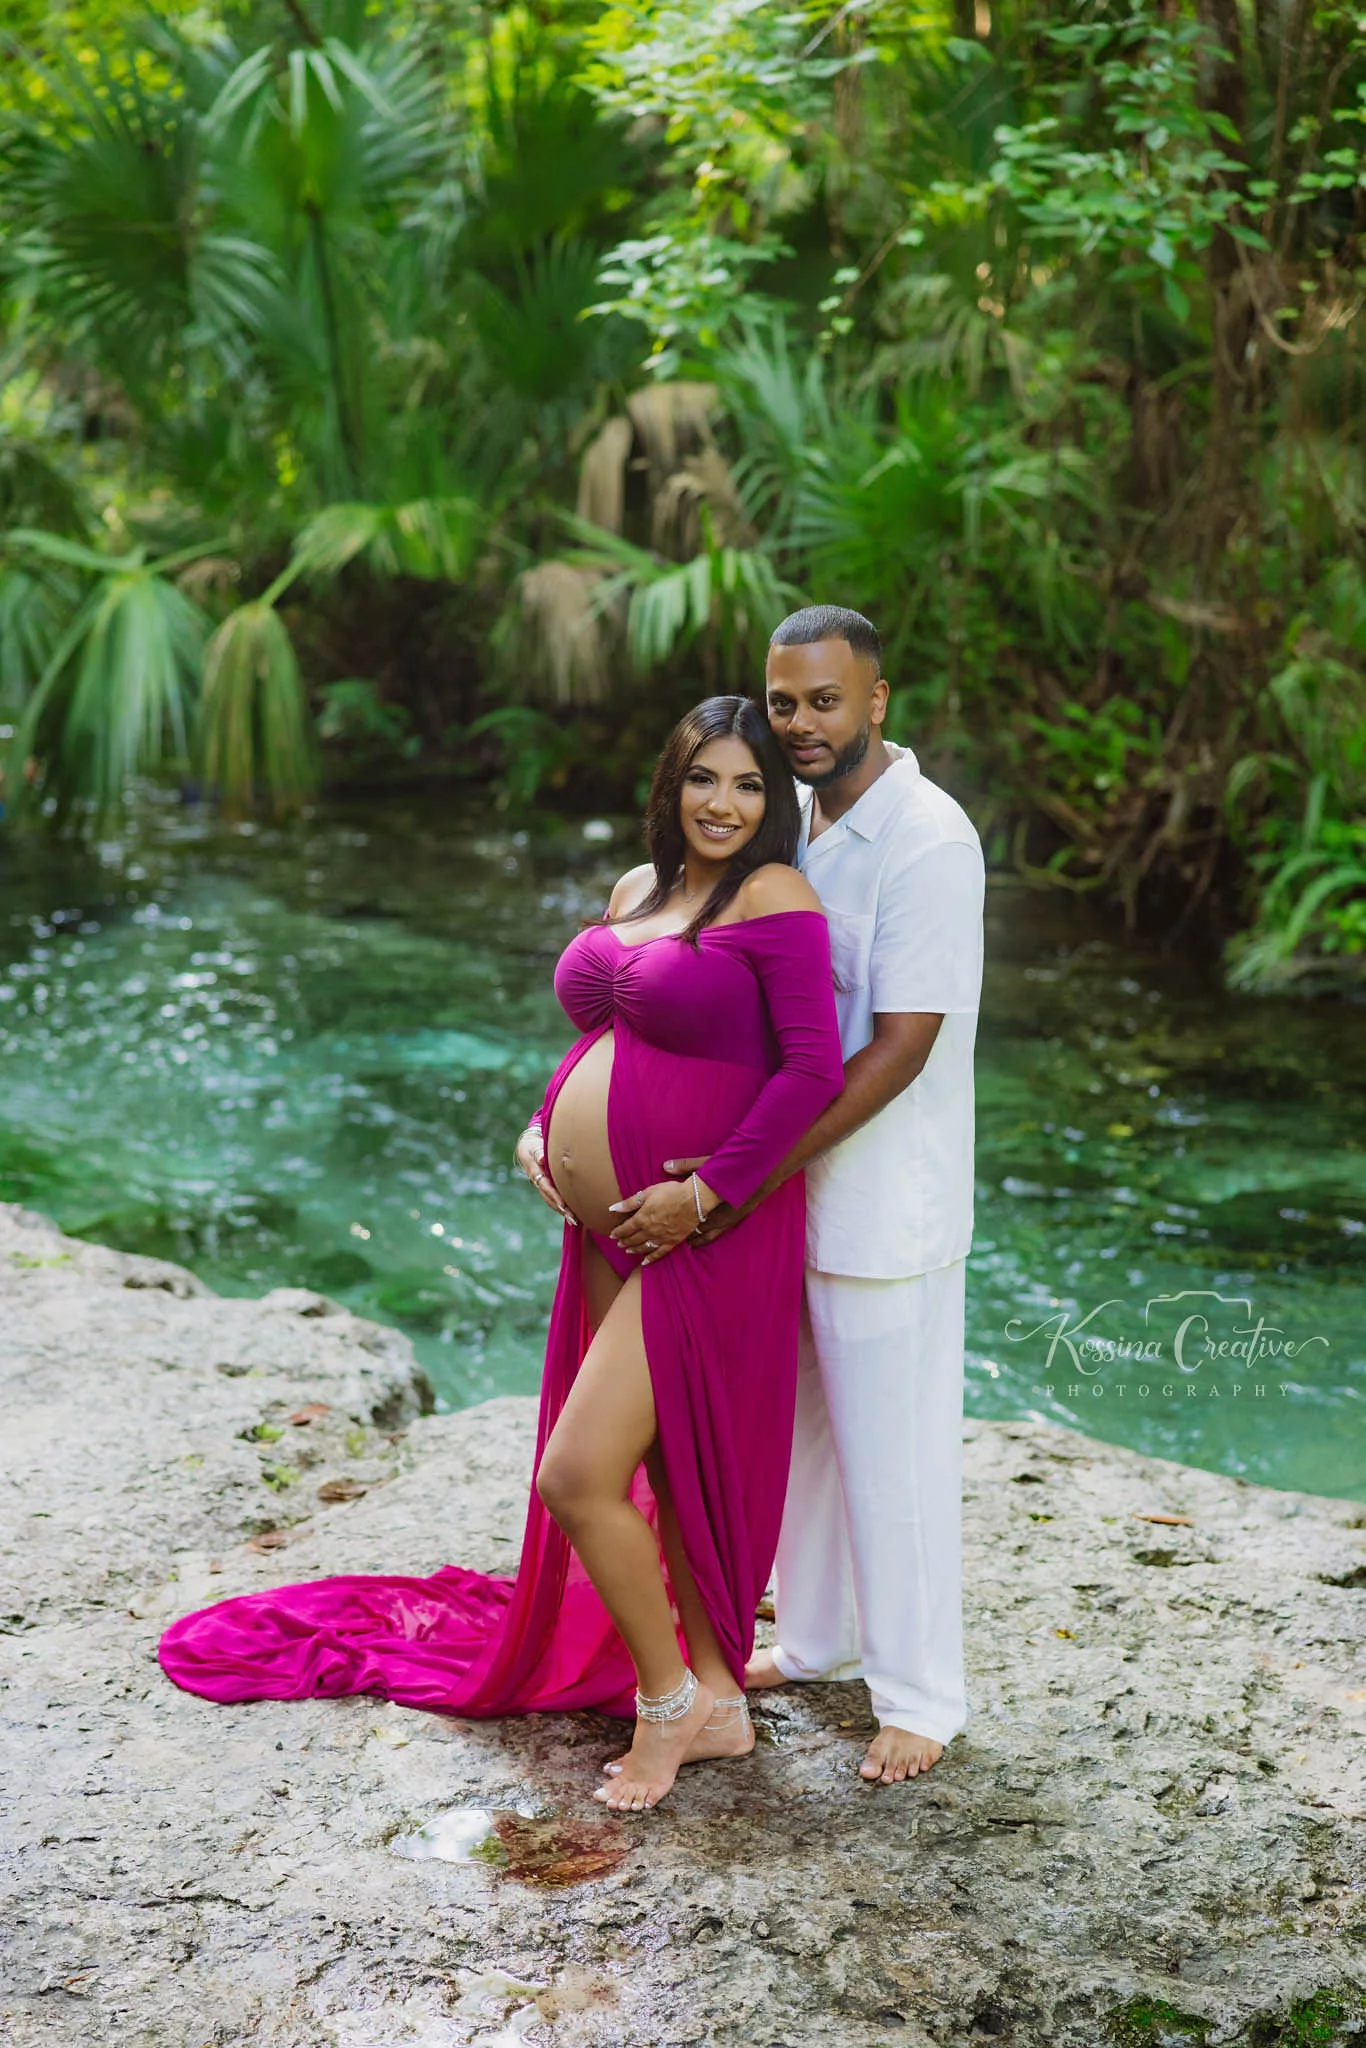 Orlando Maternity Photographer Pregnancy photography rock springs fuscia dress